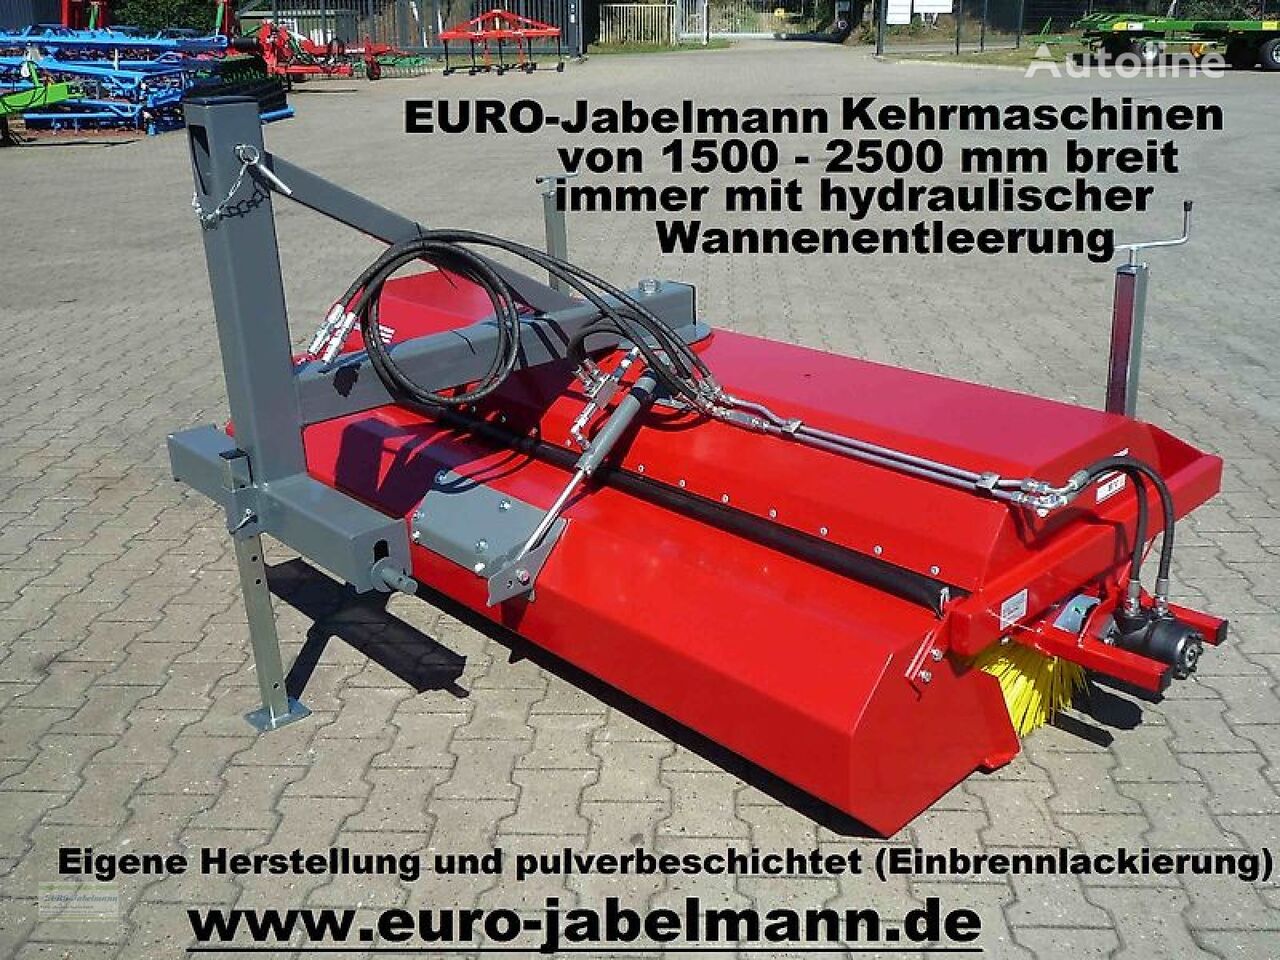 naujas šlavimo šepetys Euro-Jabelmann Kehrmaschinen, NEU, Breiten 1500 - 2500 mm, eigene Herstellung